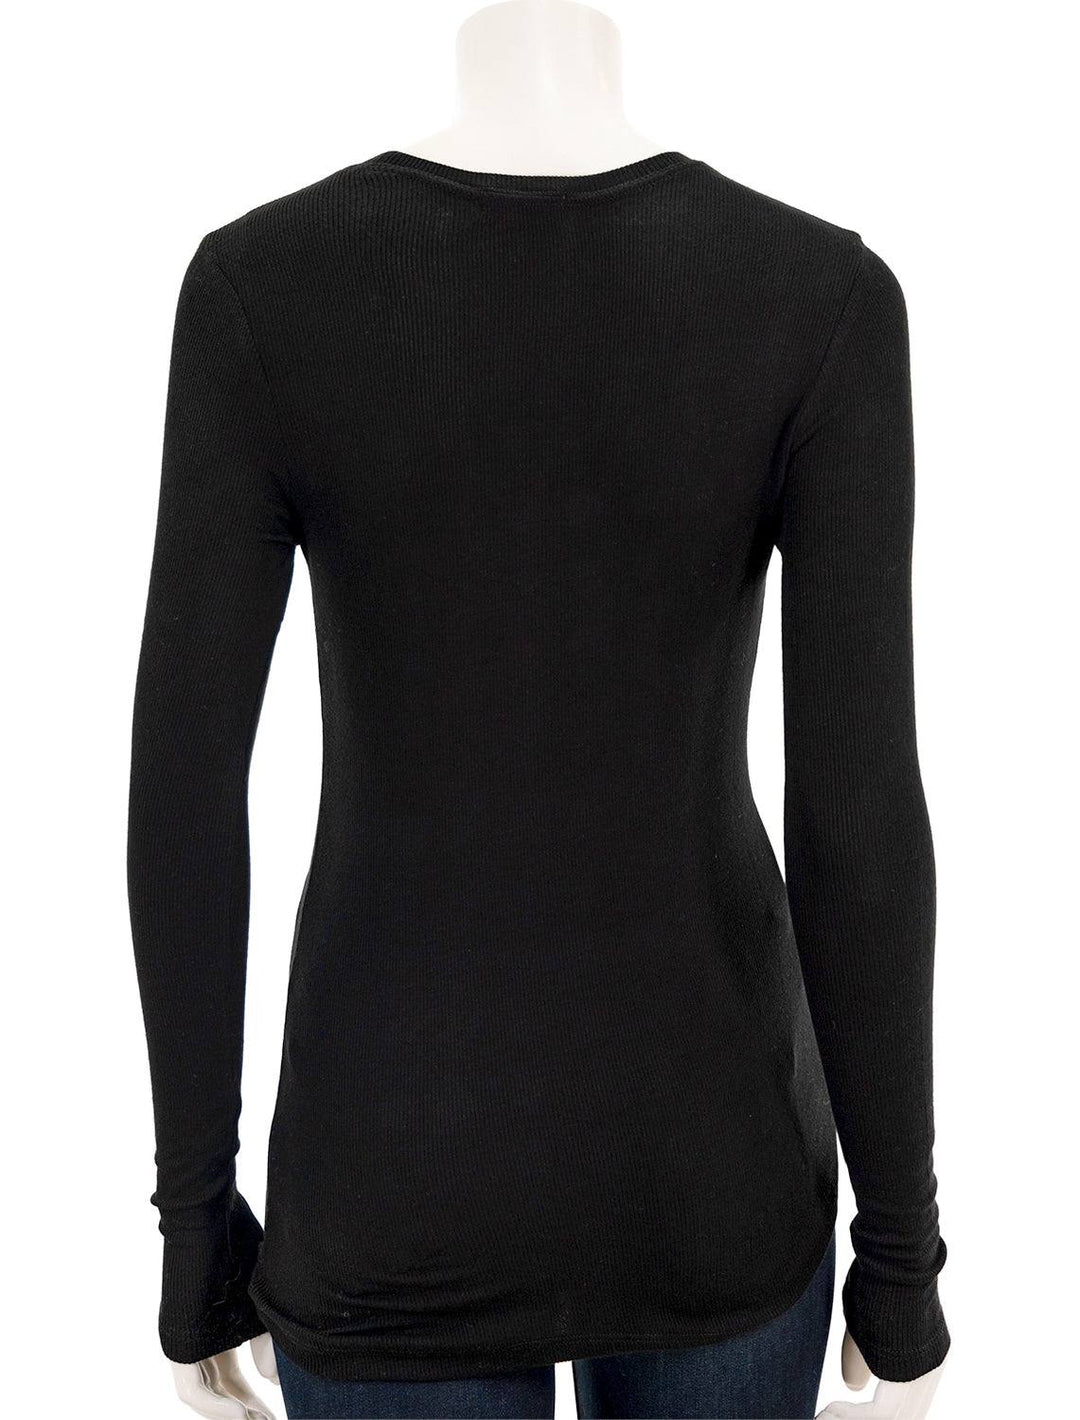 Back view of Goldie Lewinter's ribbed long sleeve tee in black.